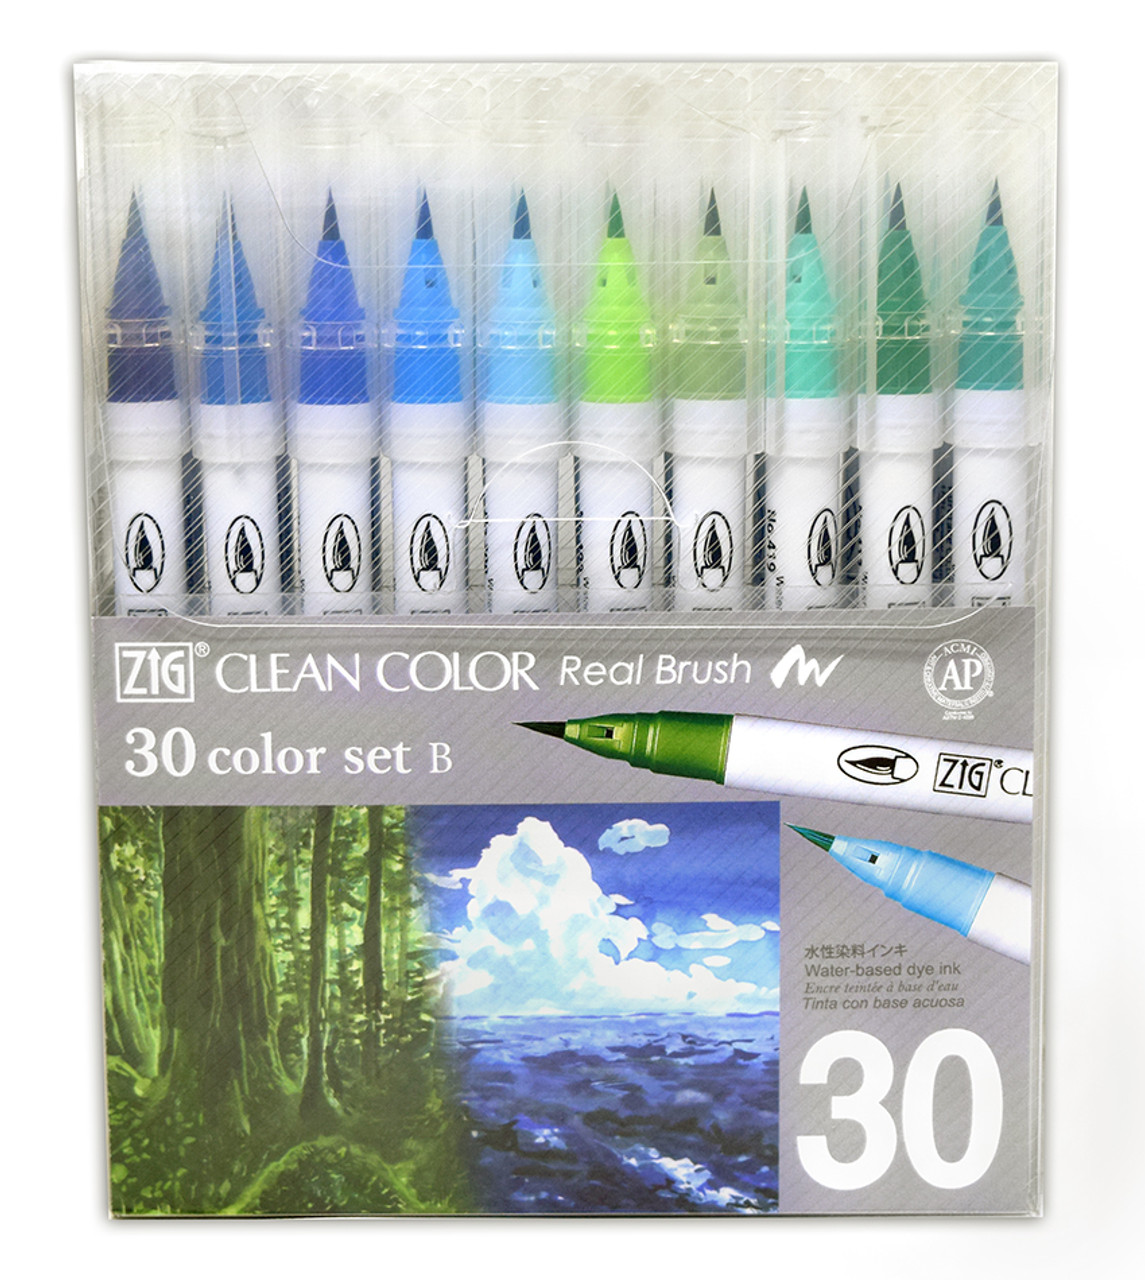  Kuretake ZIG Clean Color DOT markers 4 colors set